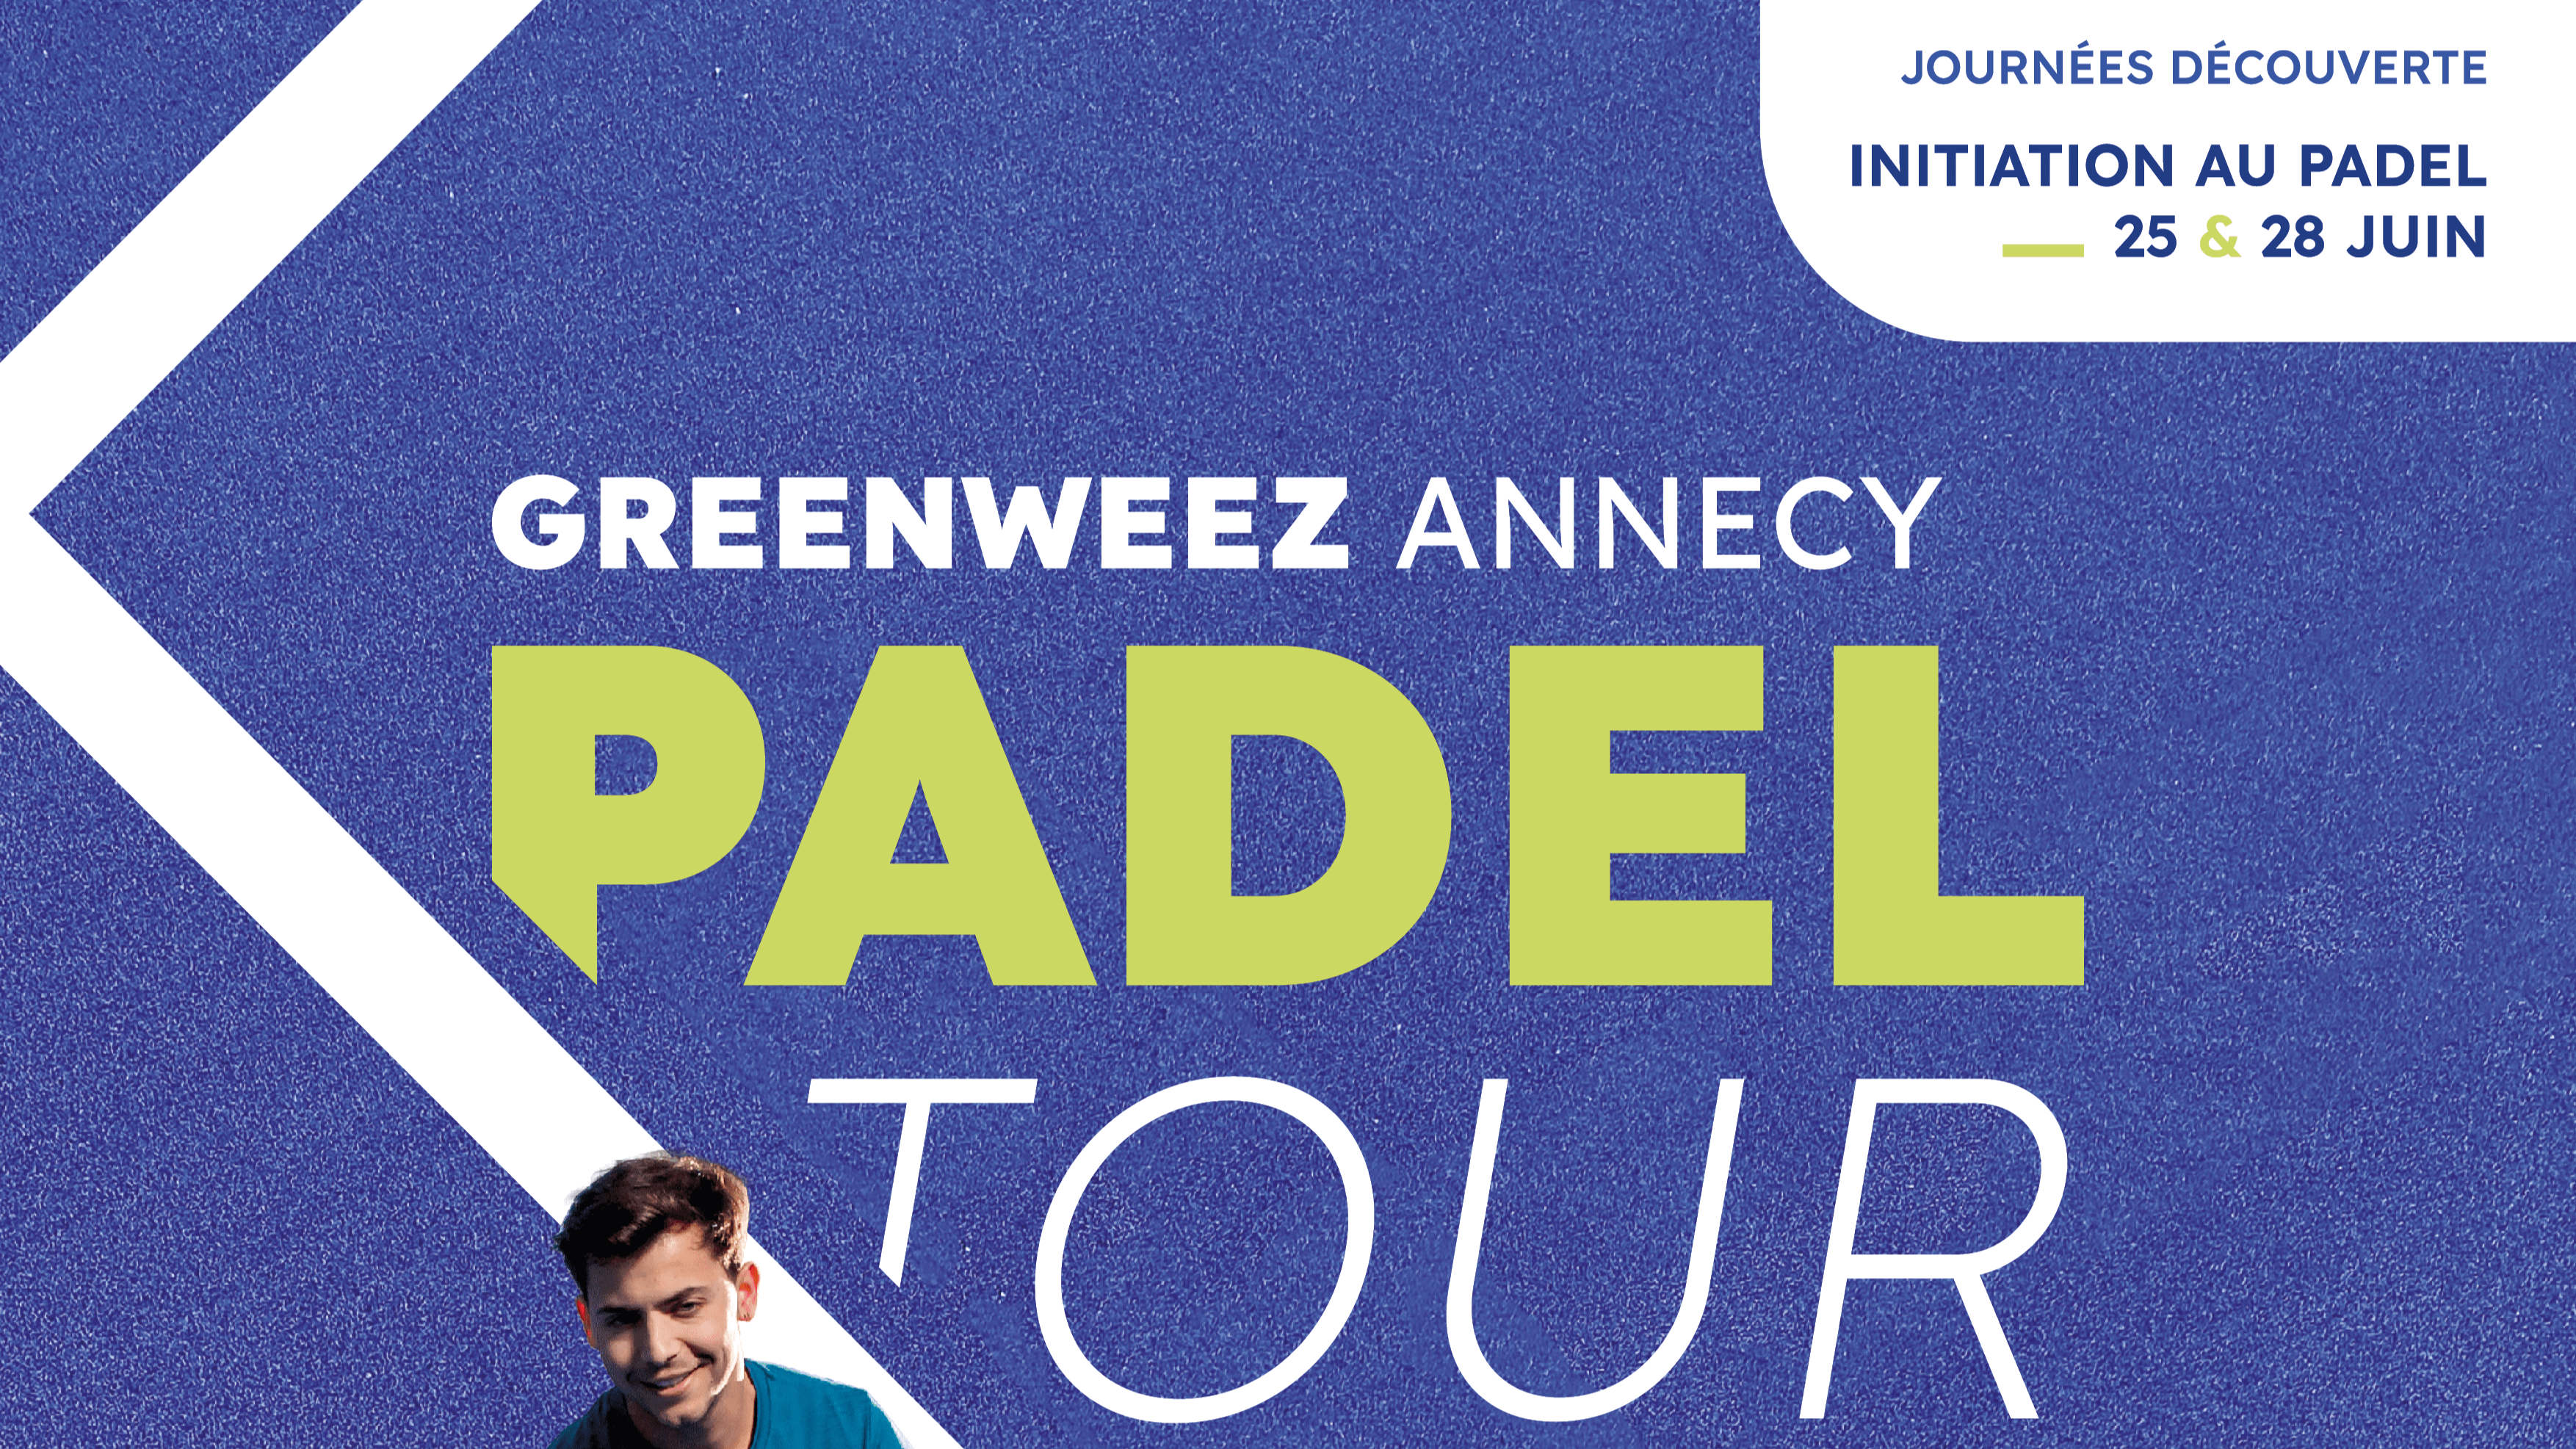 Greenweez Annecy Padel Tour si prepara ad animare l'Alta Savoia